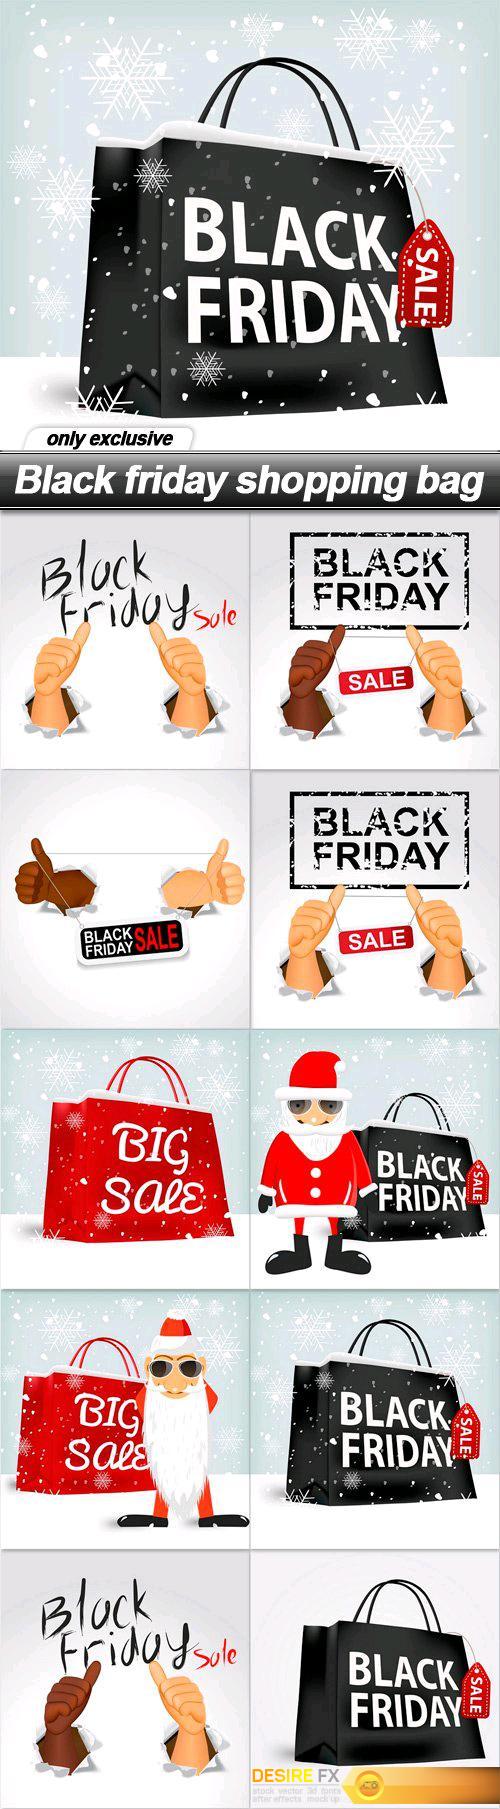 Black friday shopping bag - 10 EPS